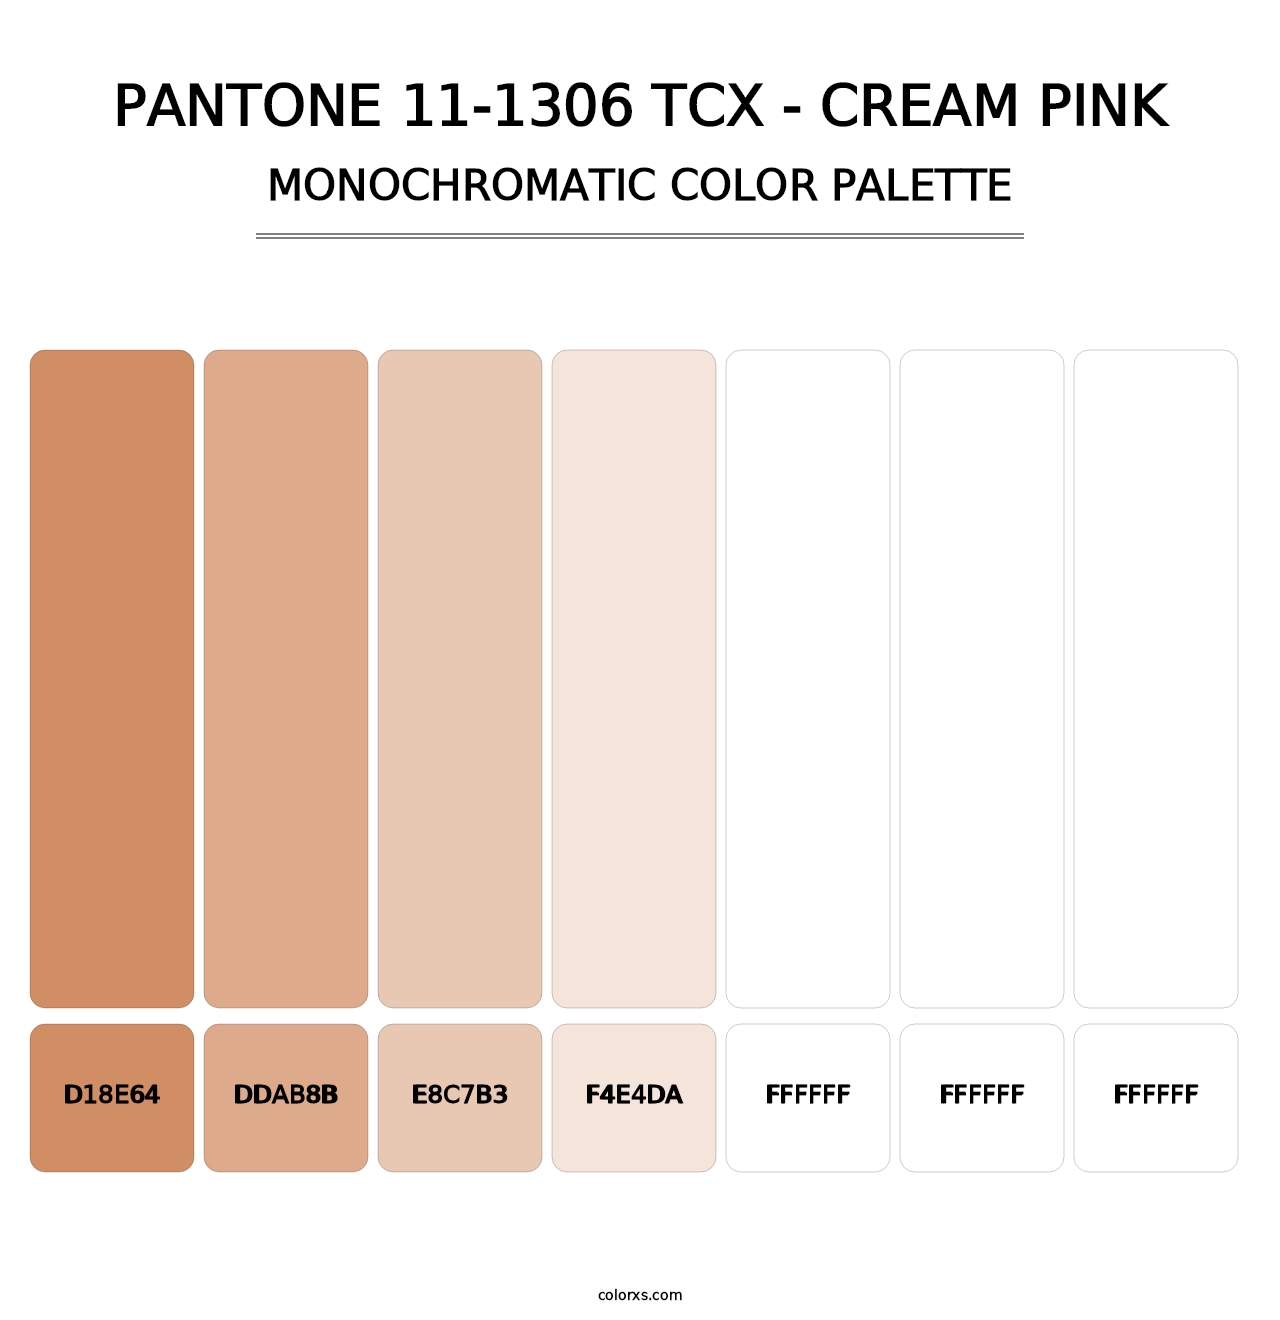 PANTONE 11-1306 TCX - Cream Pink - Monochromatic Color Palette